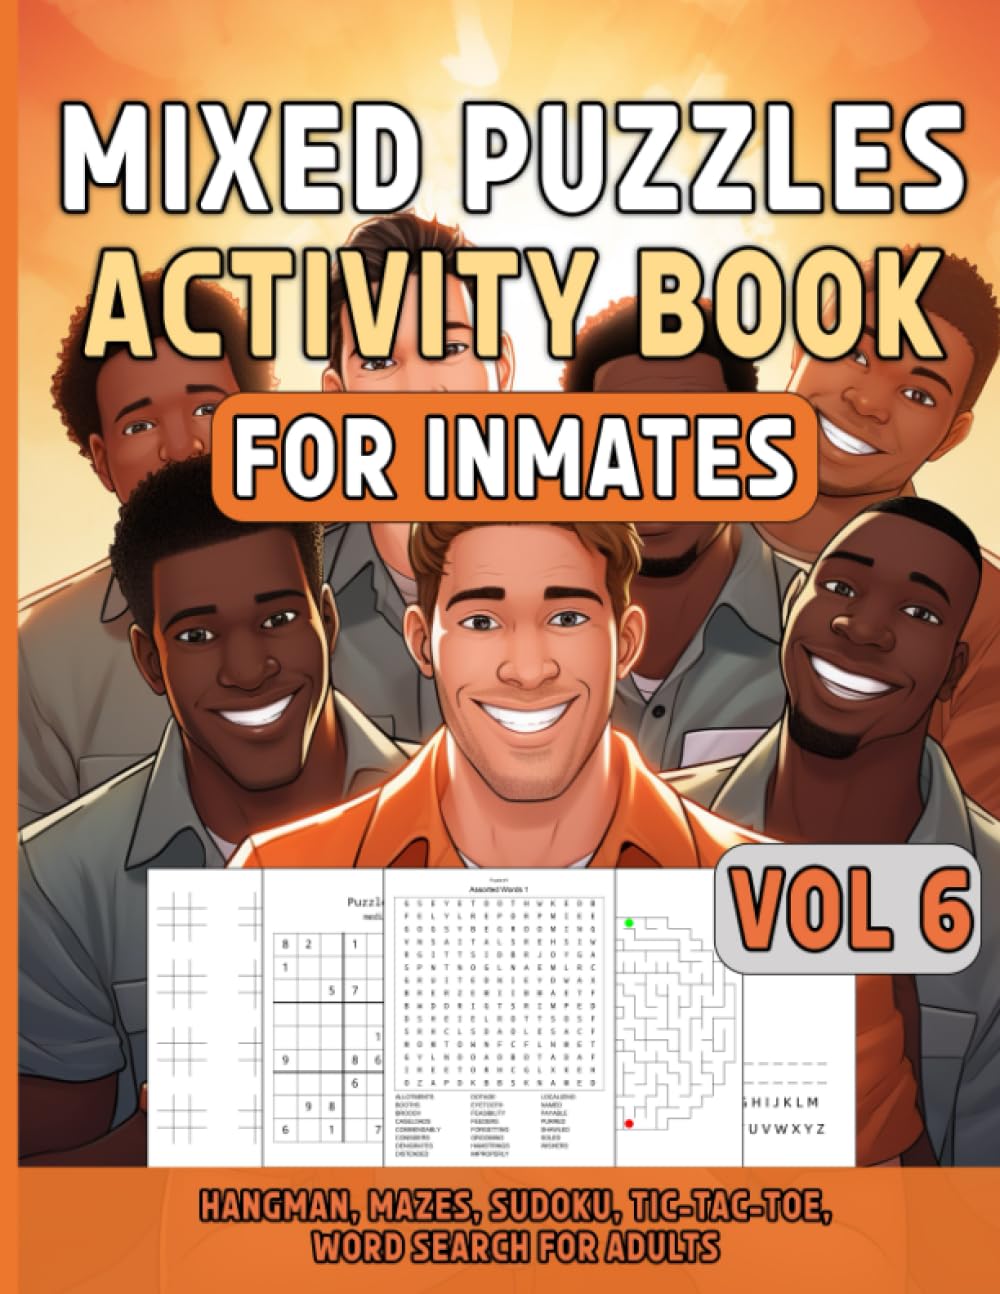 Mixed Puzzles Activity Book For Inmates Vol 6 - SureShot Books Publishing LLC